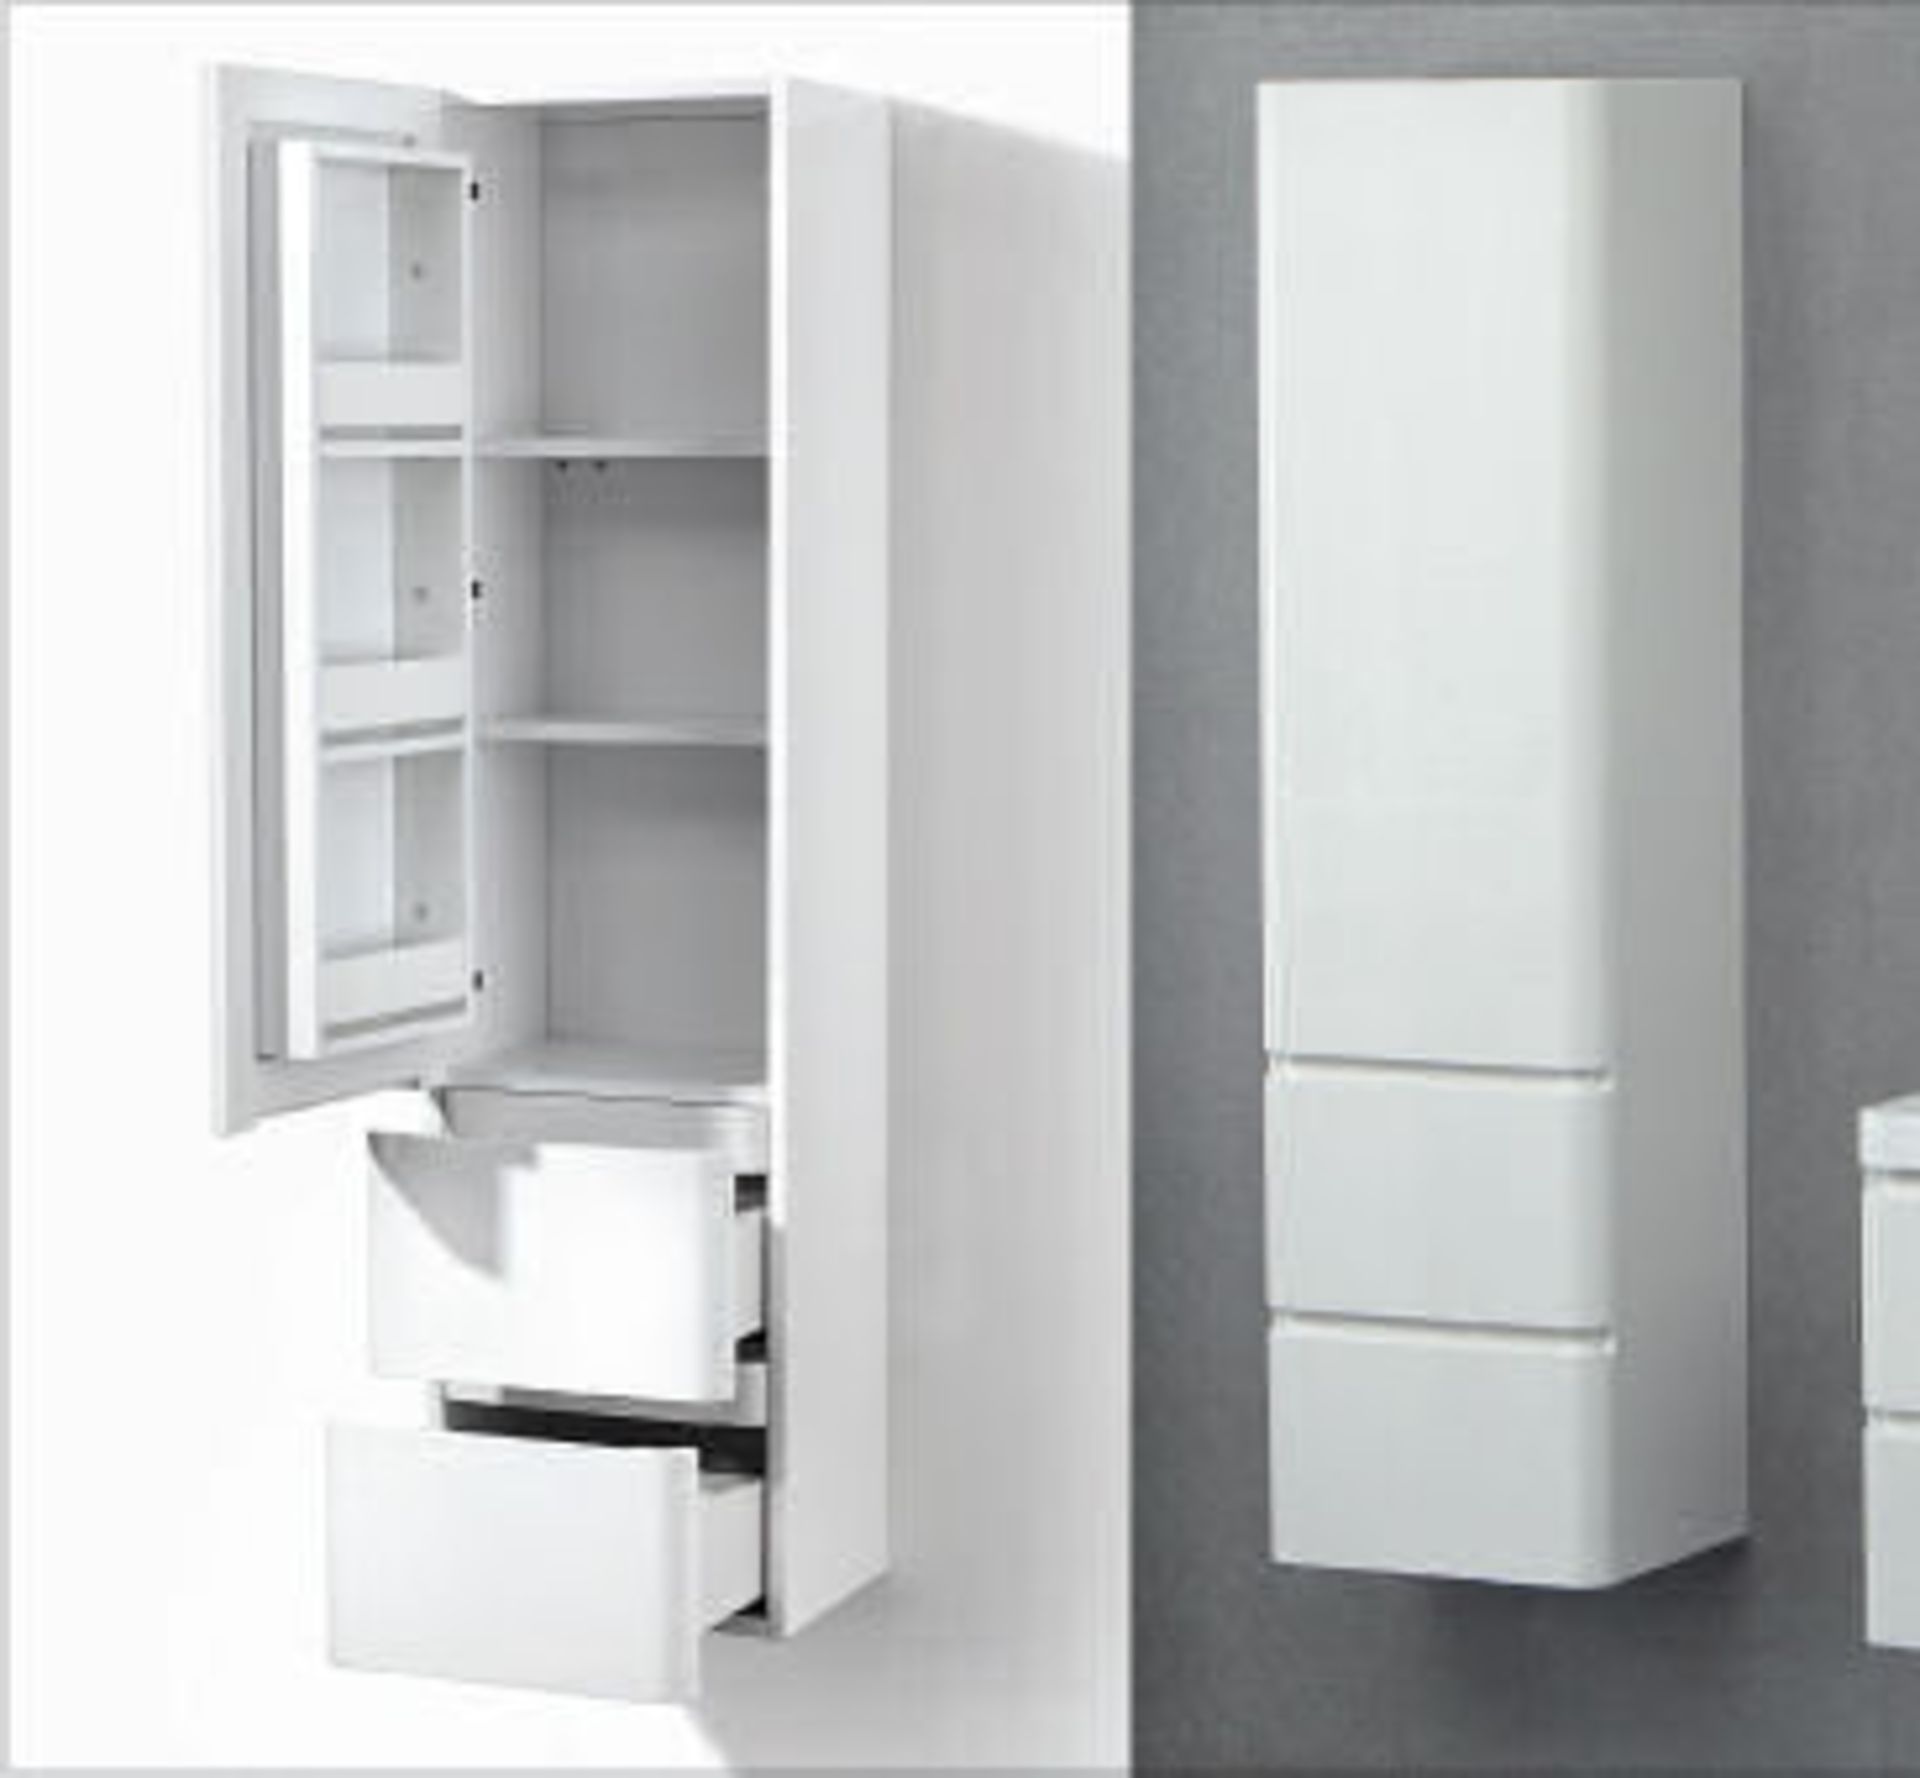 1 x White Gloss Storage Cabinet 155